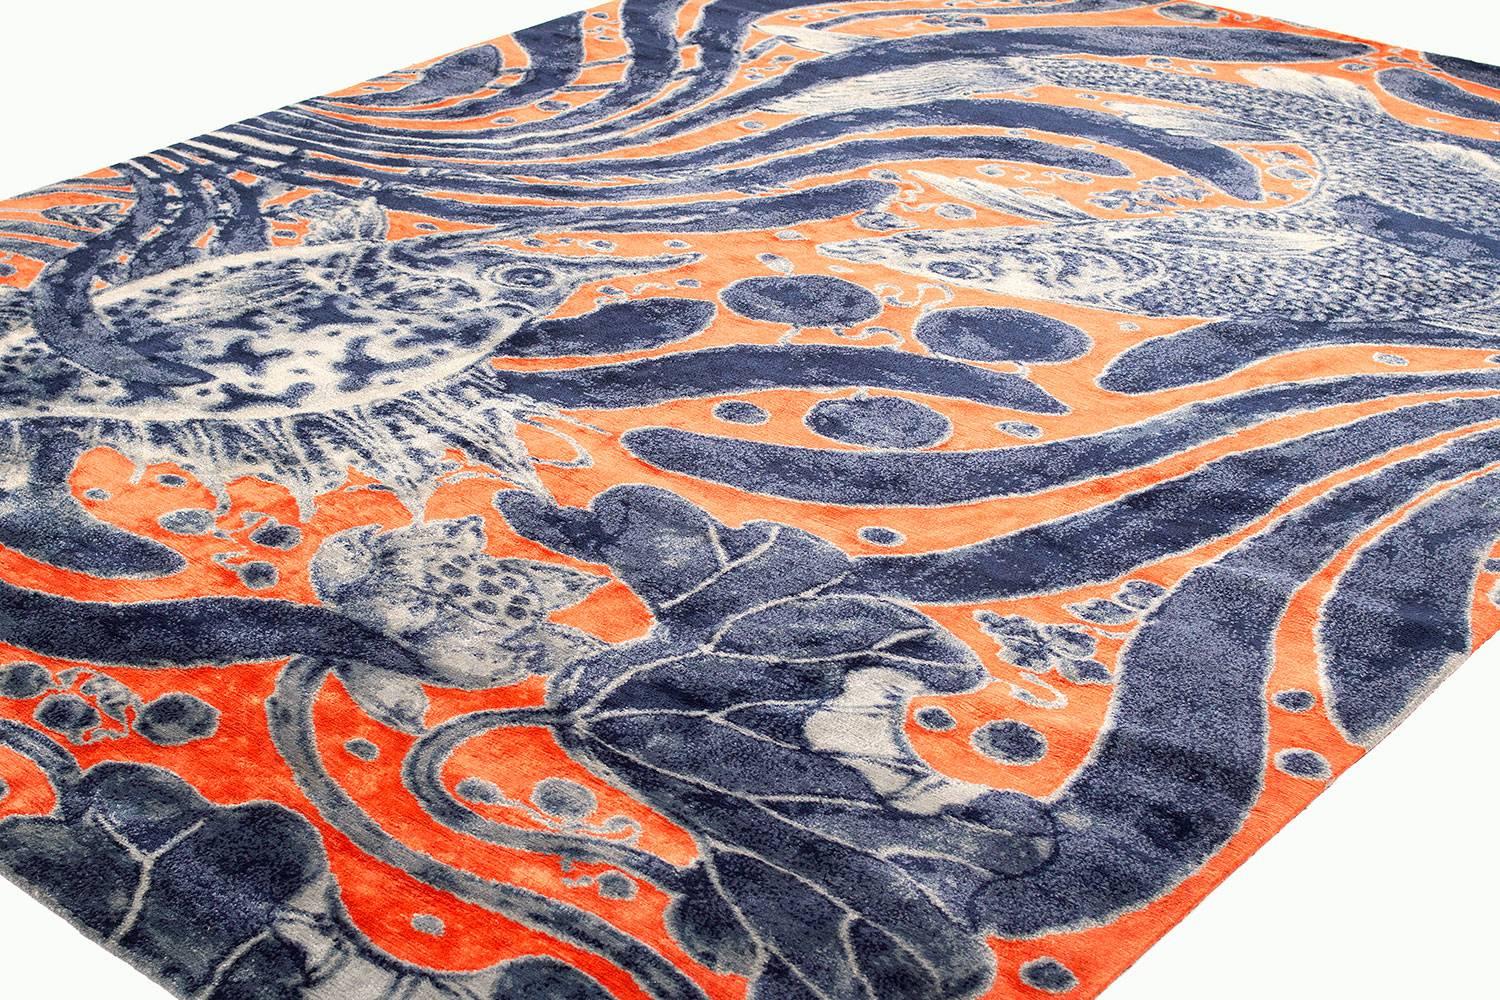 Organic Modern Modern 'Aquatic Life' Rug in Wool and Silk by CARINI 9x12